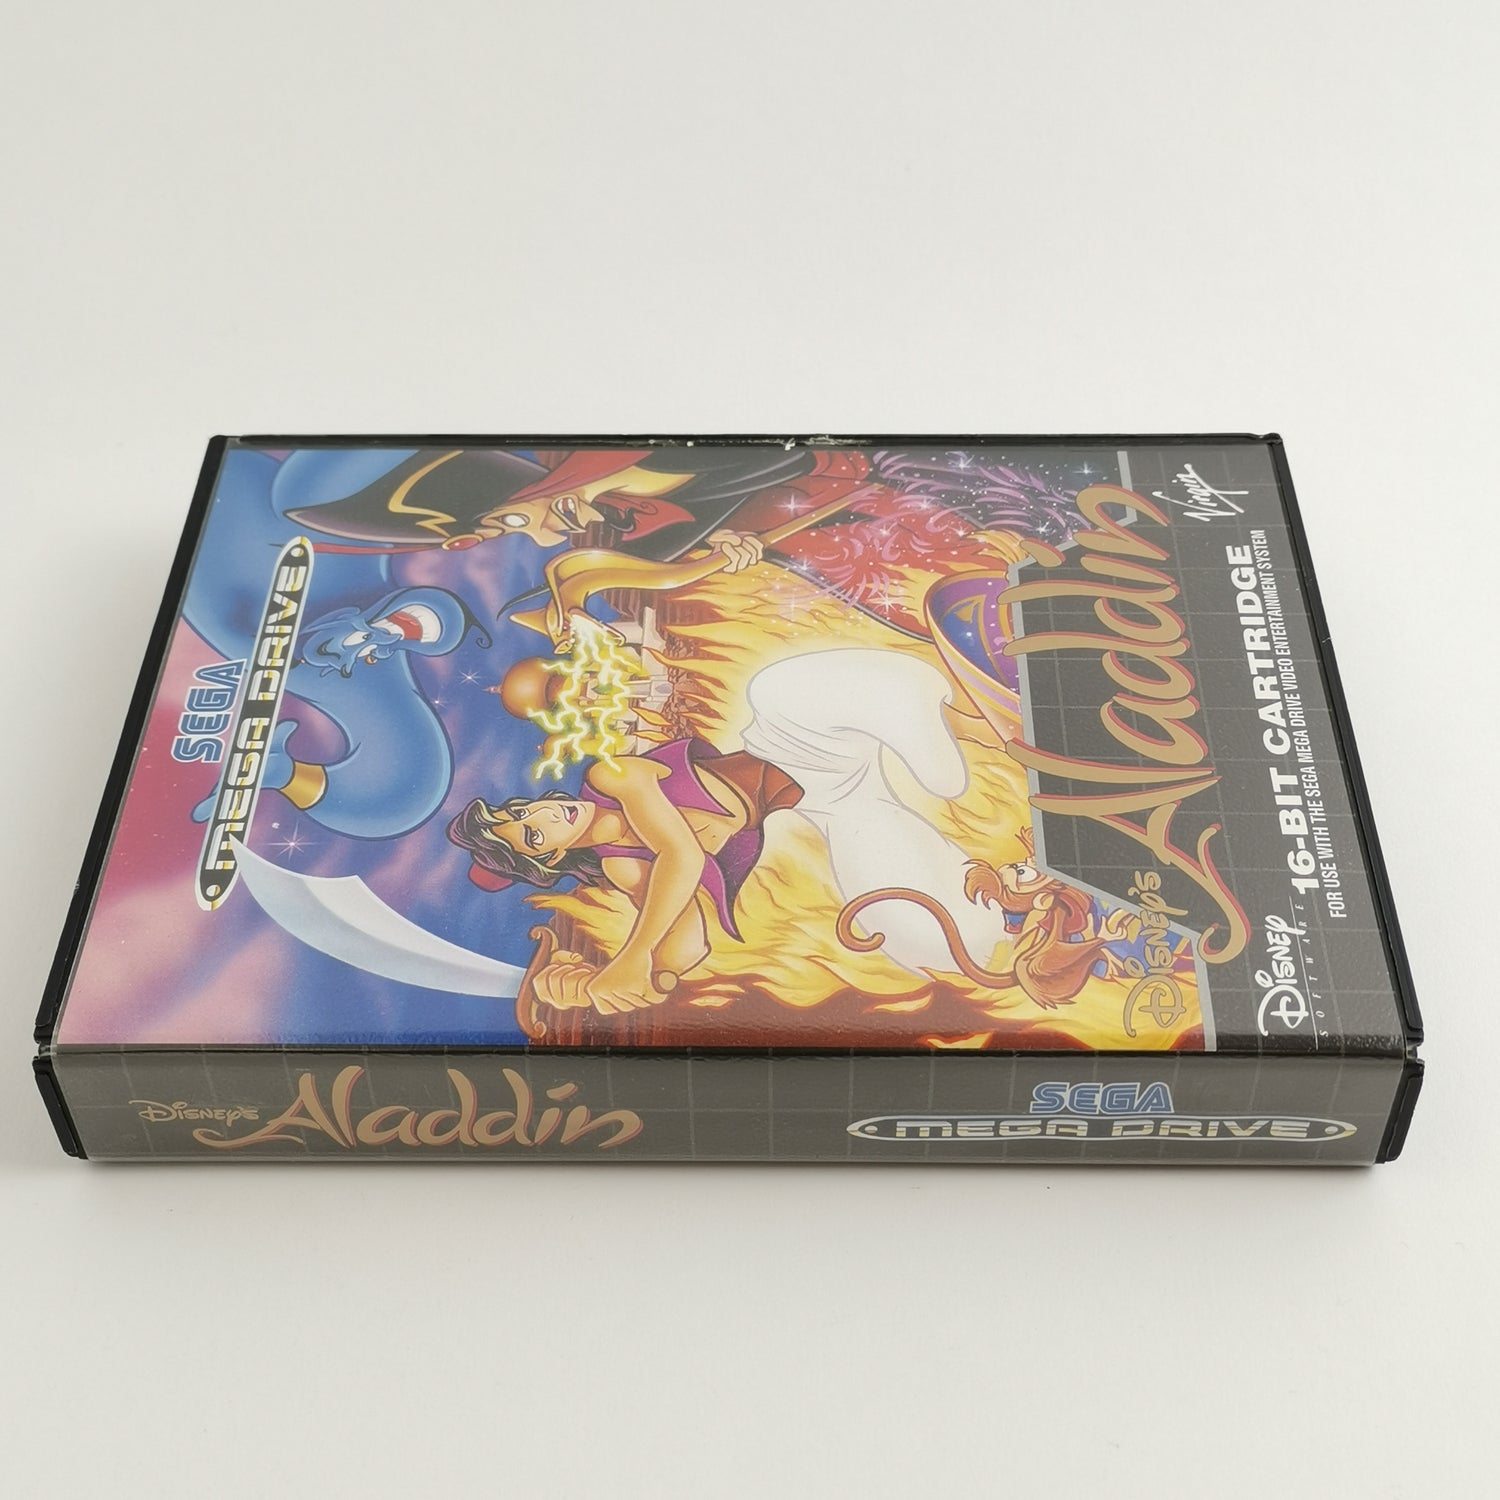 Sega Mega Drive Spiel : Disneys Aladdin - OVP & Anleitung | MD PAL 16 Bit [2]